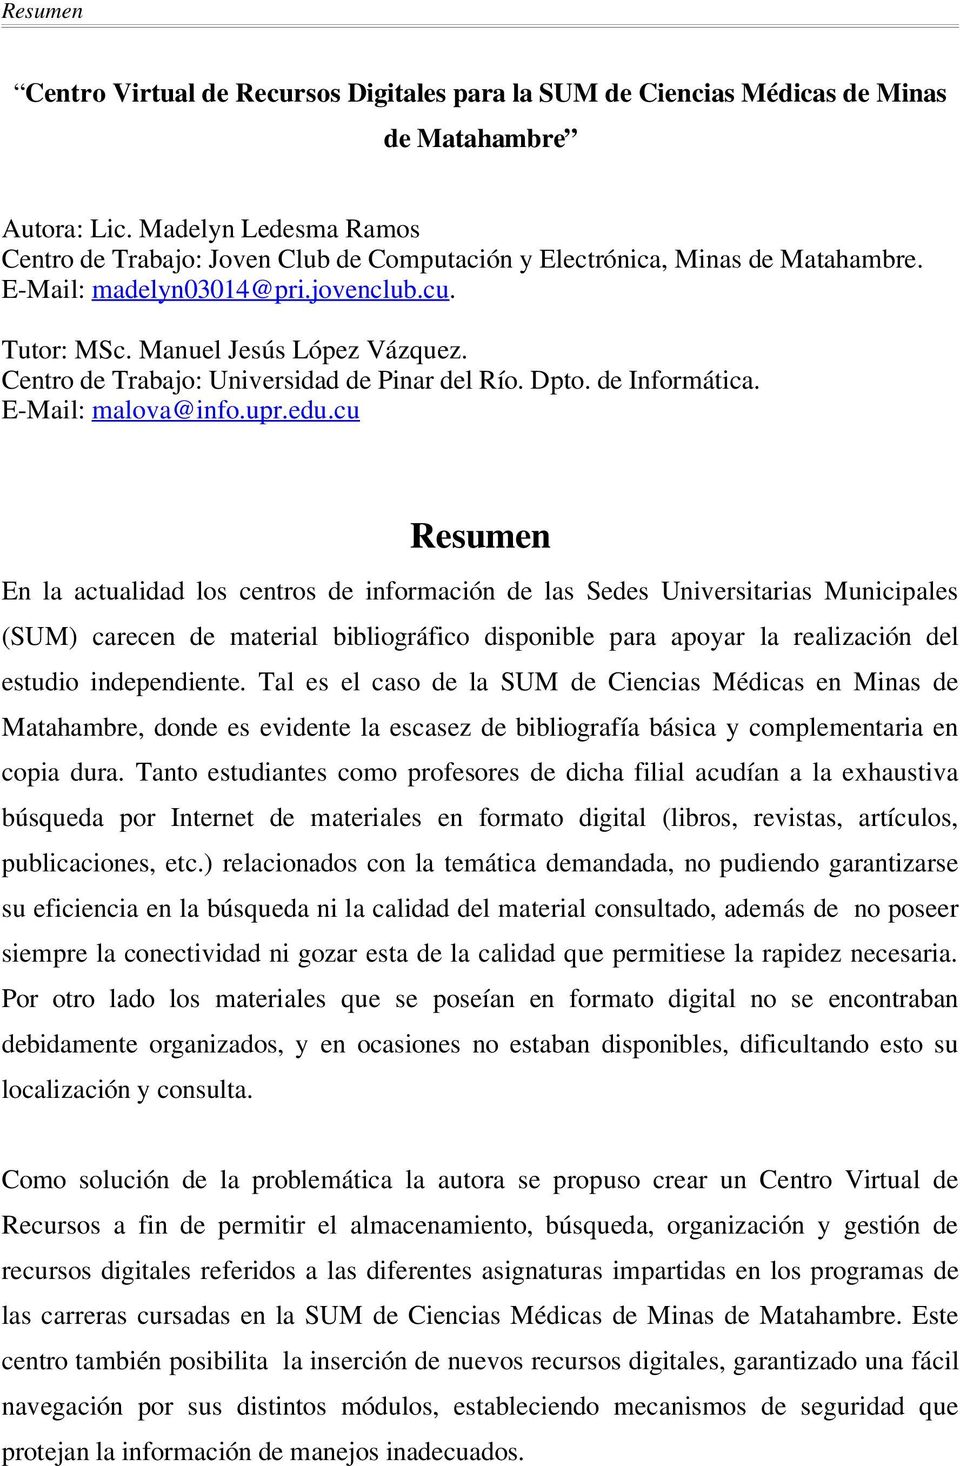 Centro de Trabajo: Universidad de Pinar del Río. Dpto. de Informática. E-Mail: malova@info.upr.edu.